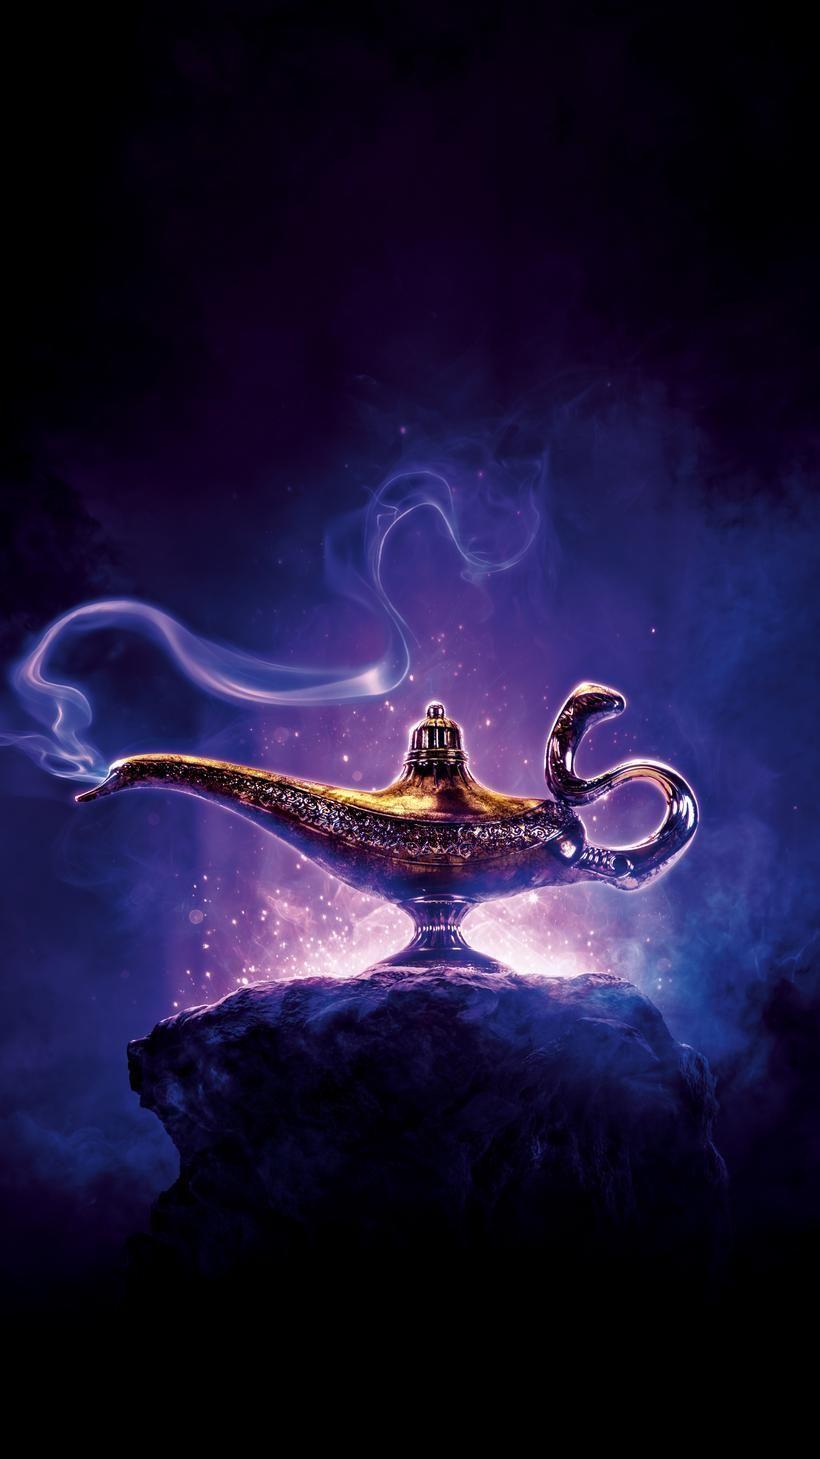 Disney Aladdin Wallpaper Free Disney Aladdin Background